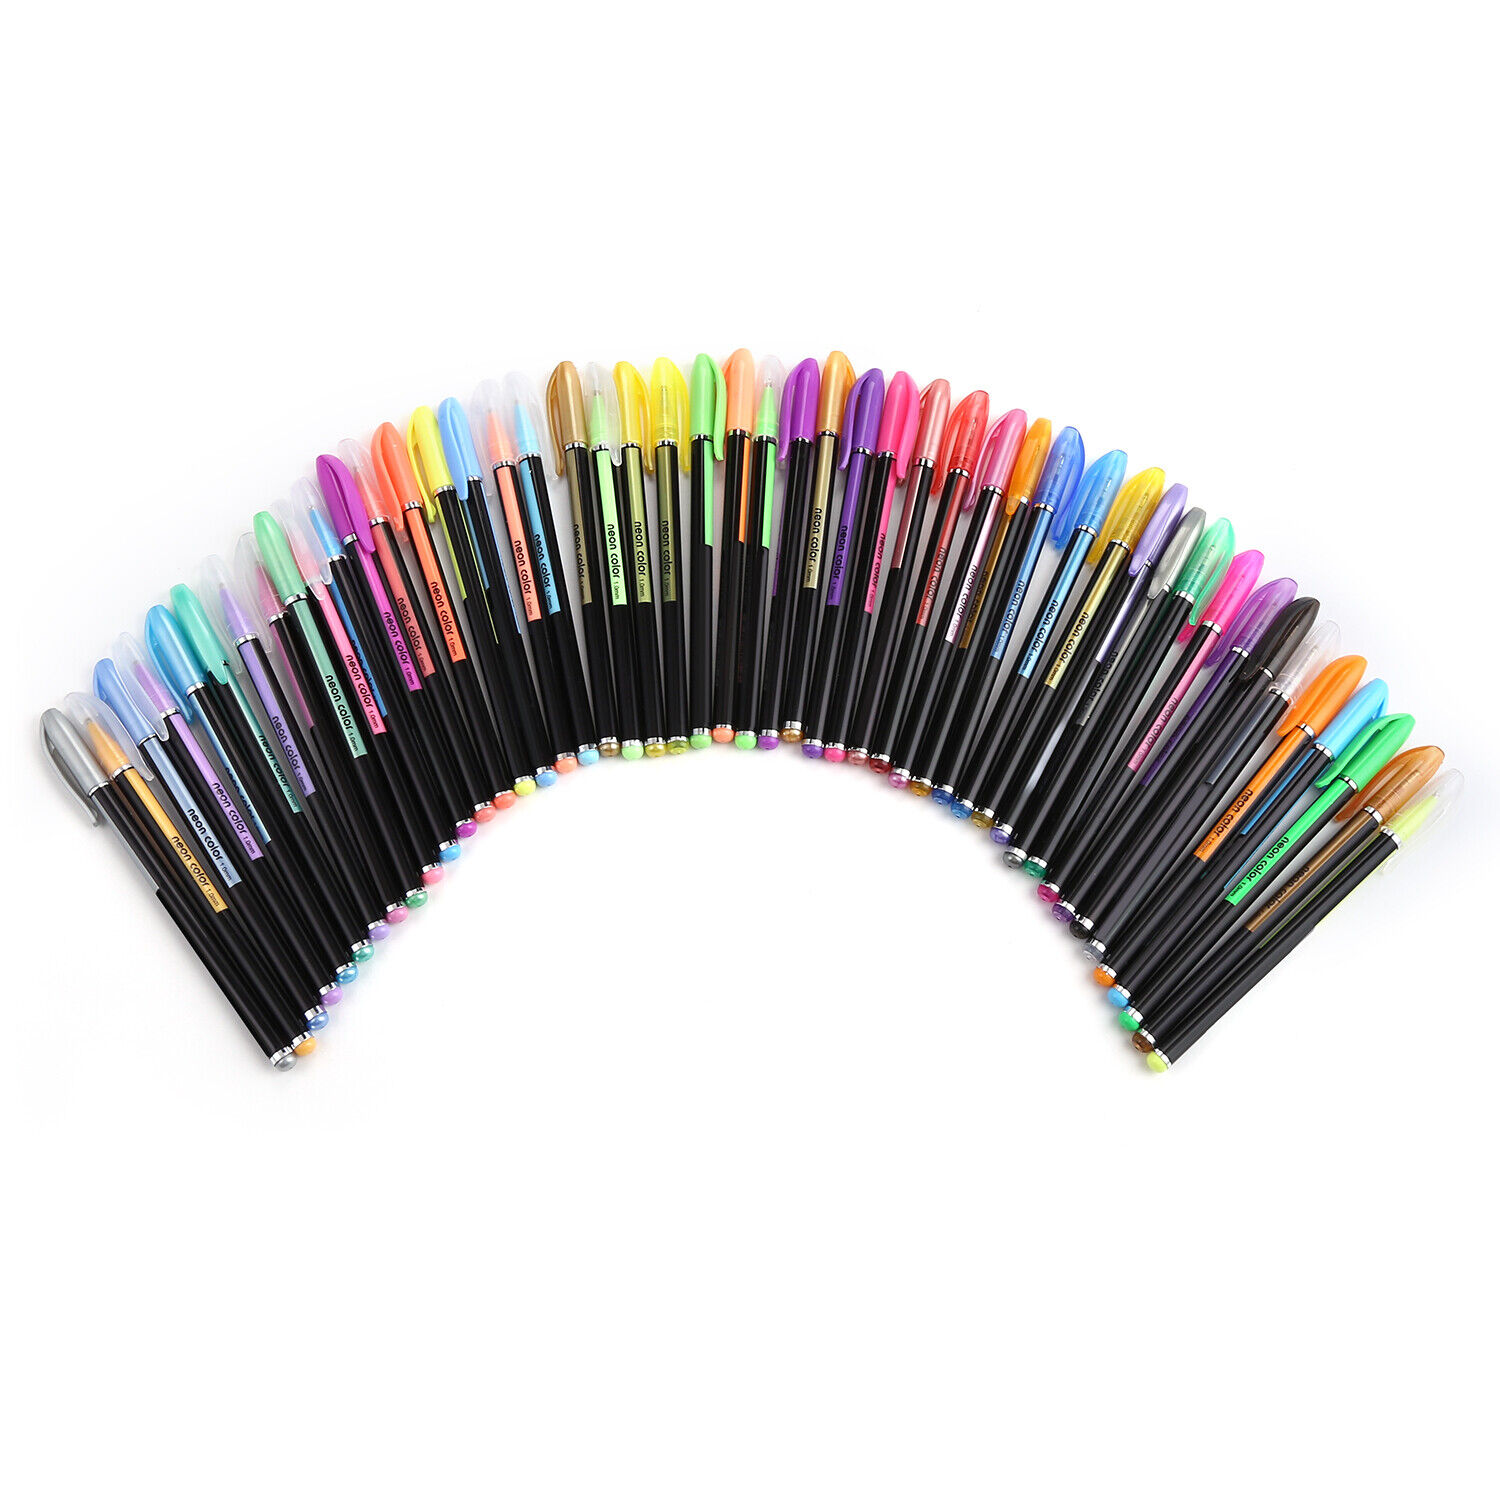 48 Unique Colors (No Duplicates) Gel Pens Gel Pen Set for Adult Coloring Book US Unbranded Does Not Apply - фотография #12